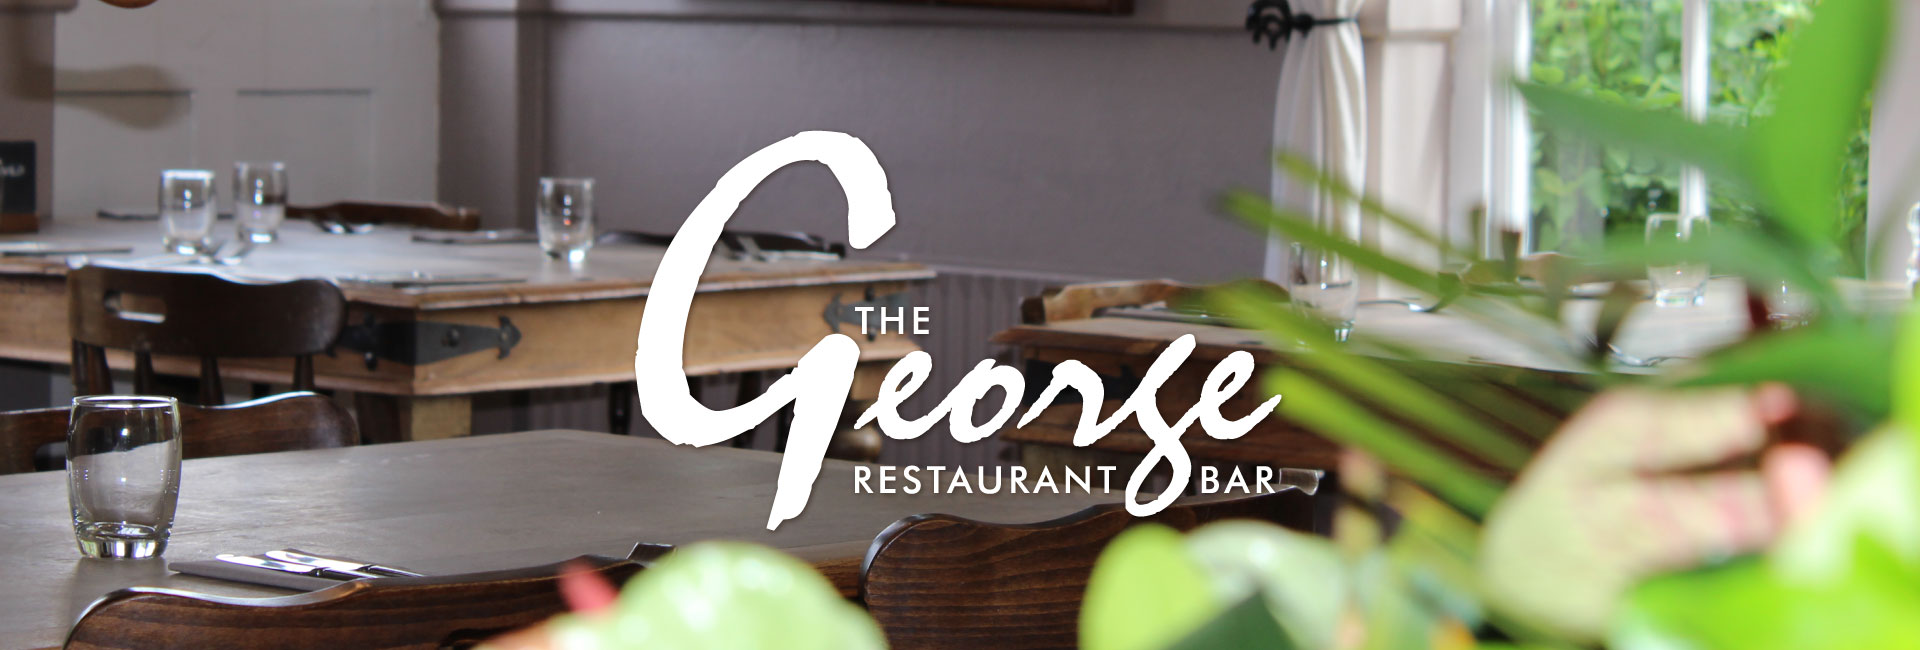 The George Restaurant & Bar Molash